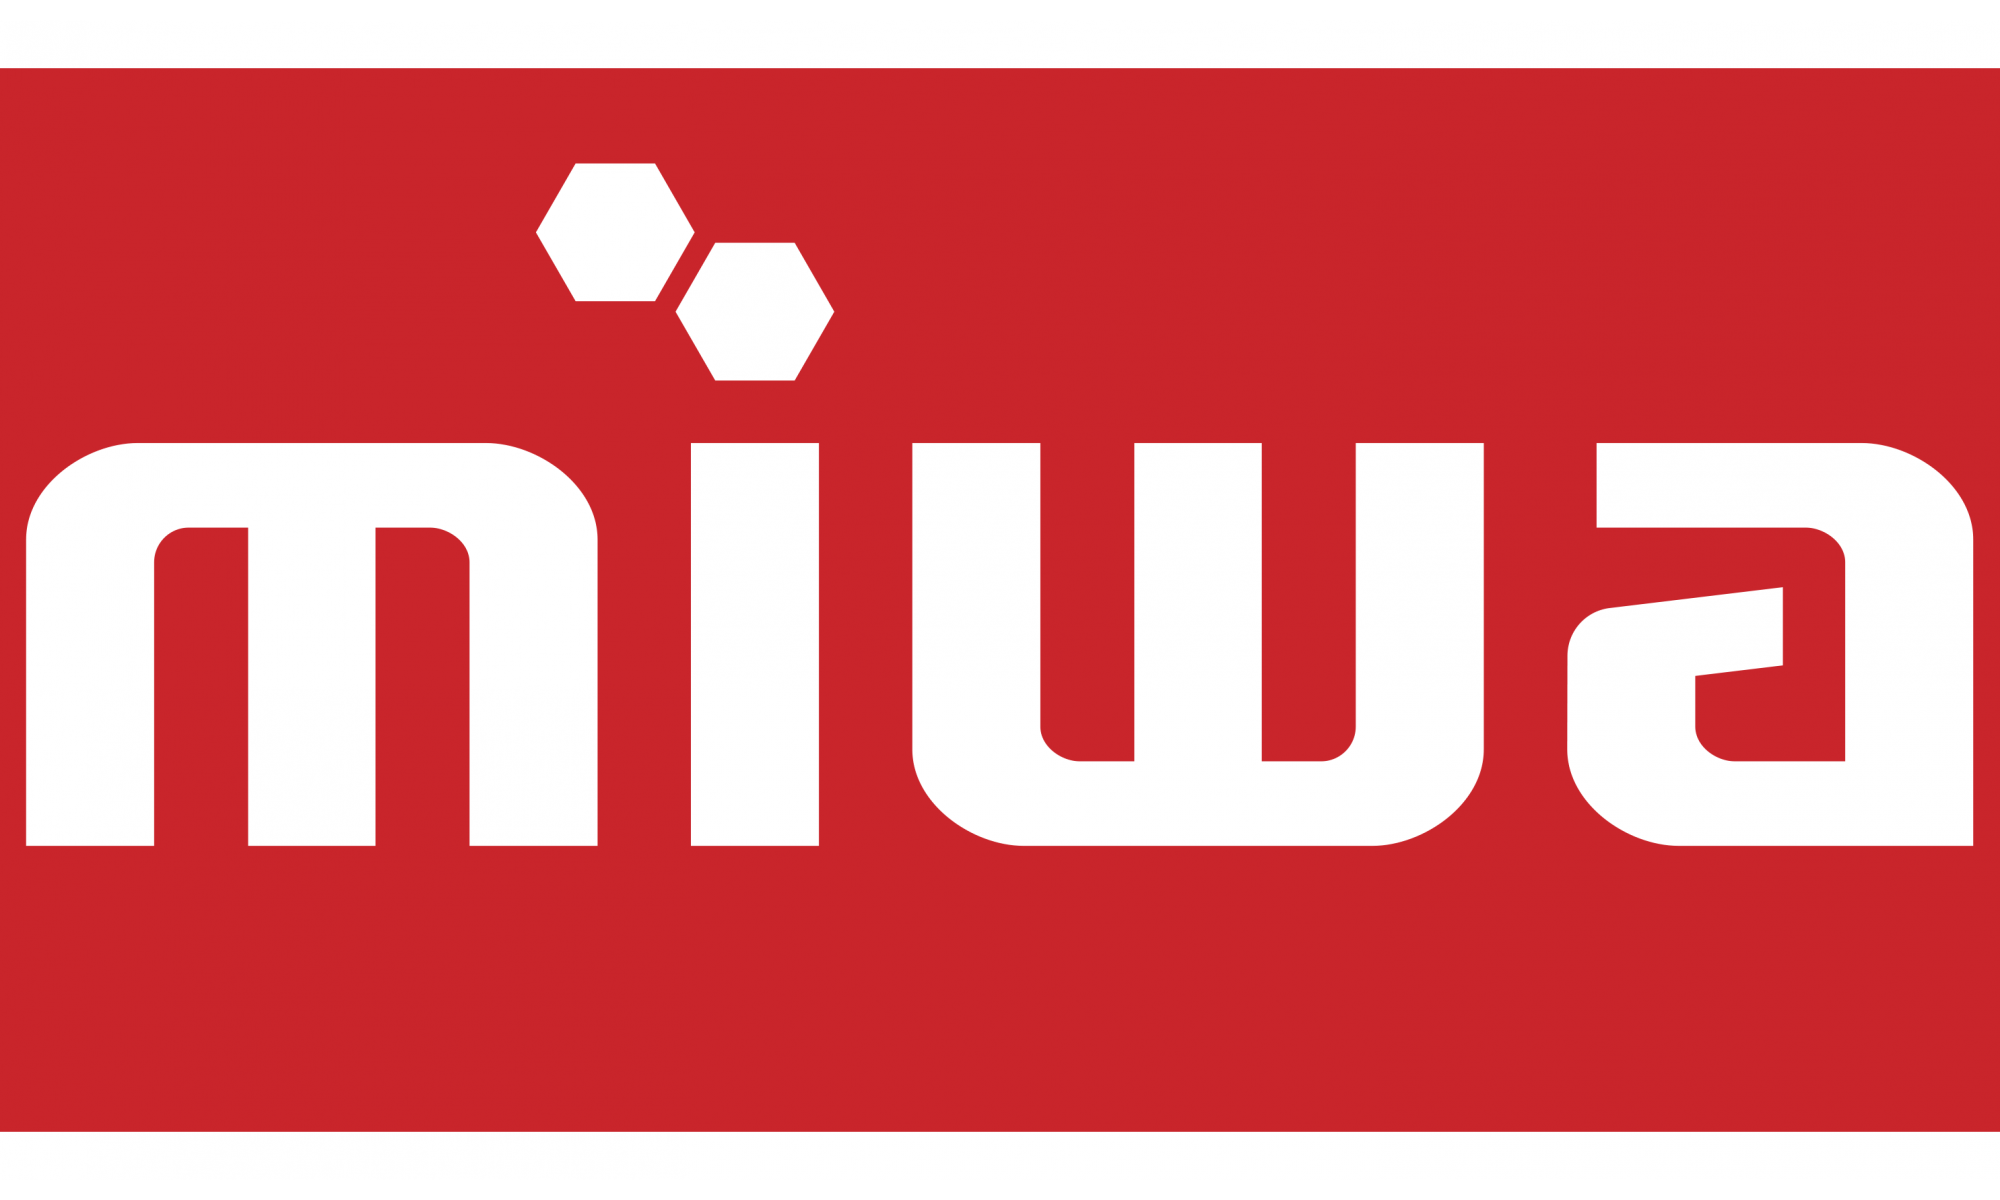 logo MIWA clear